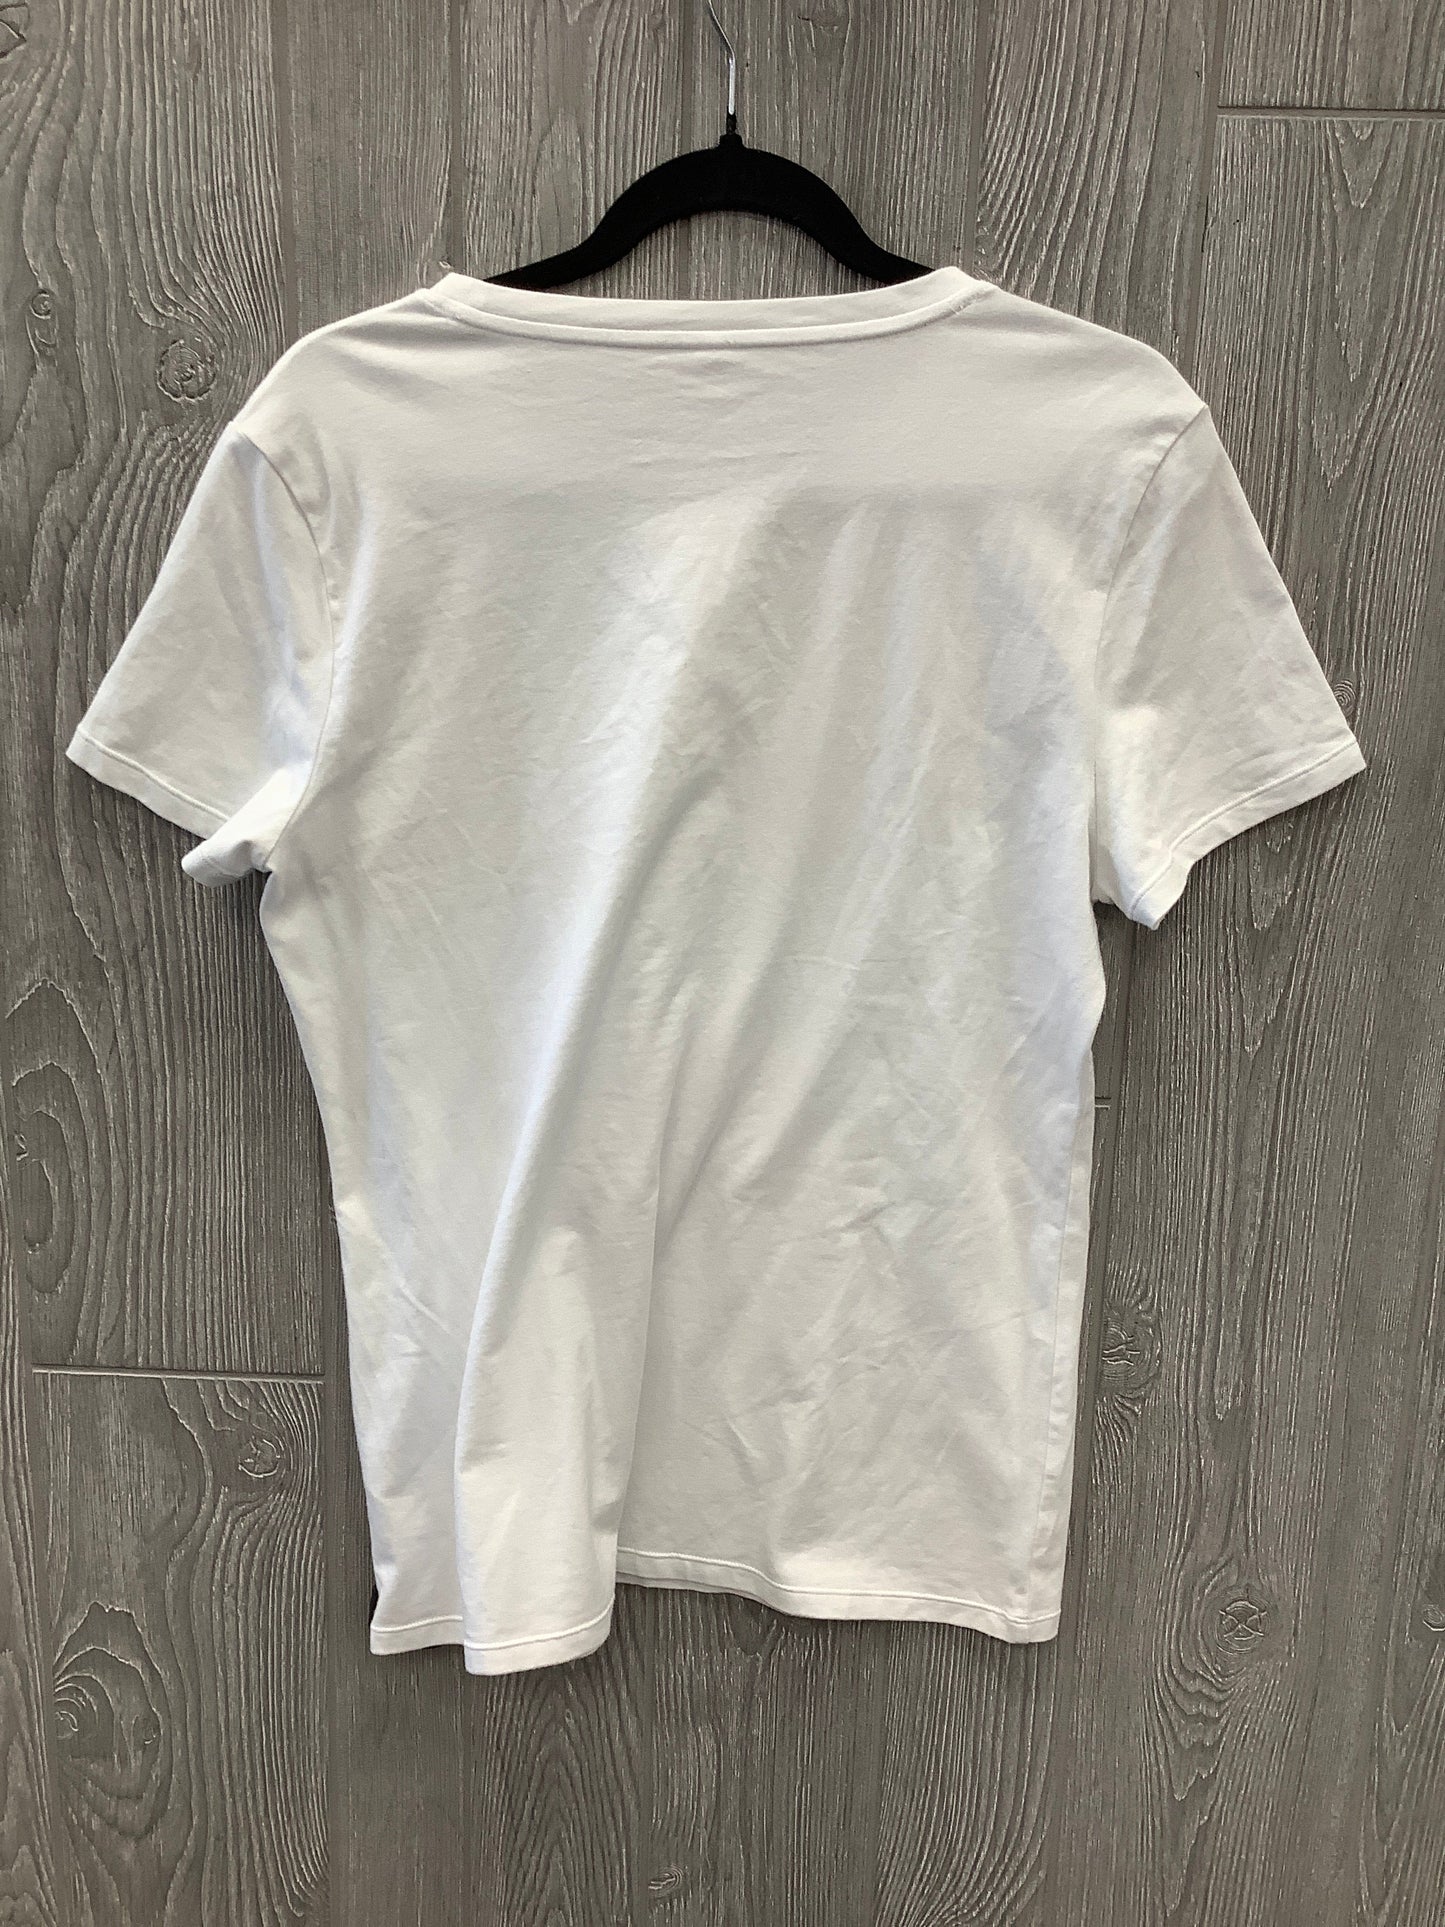 White Top Short Sleeve Calvin Klein, Size Xl